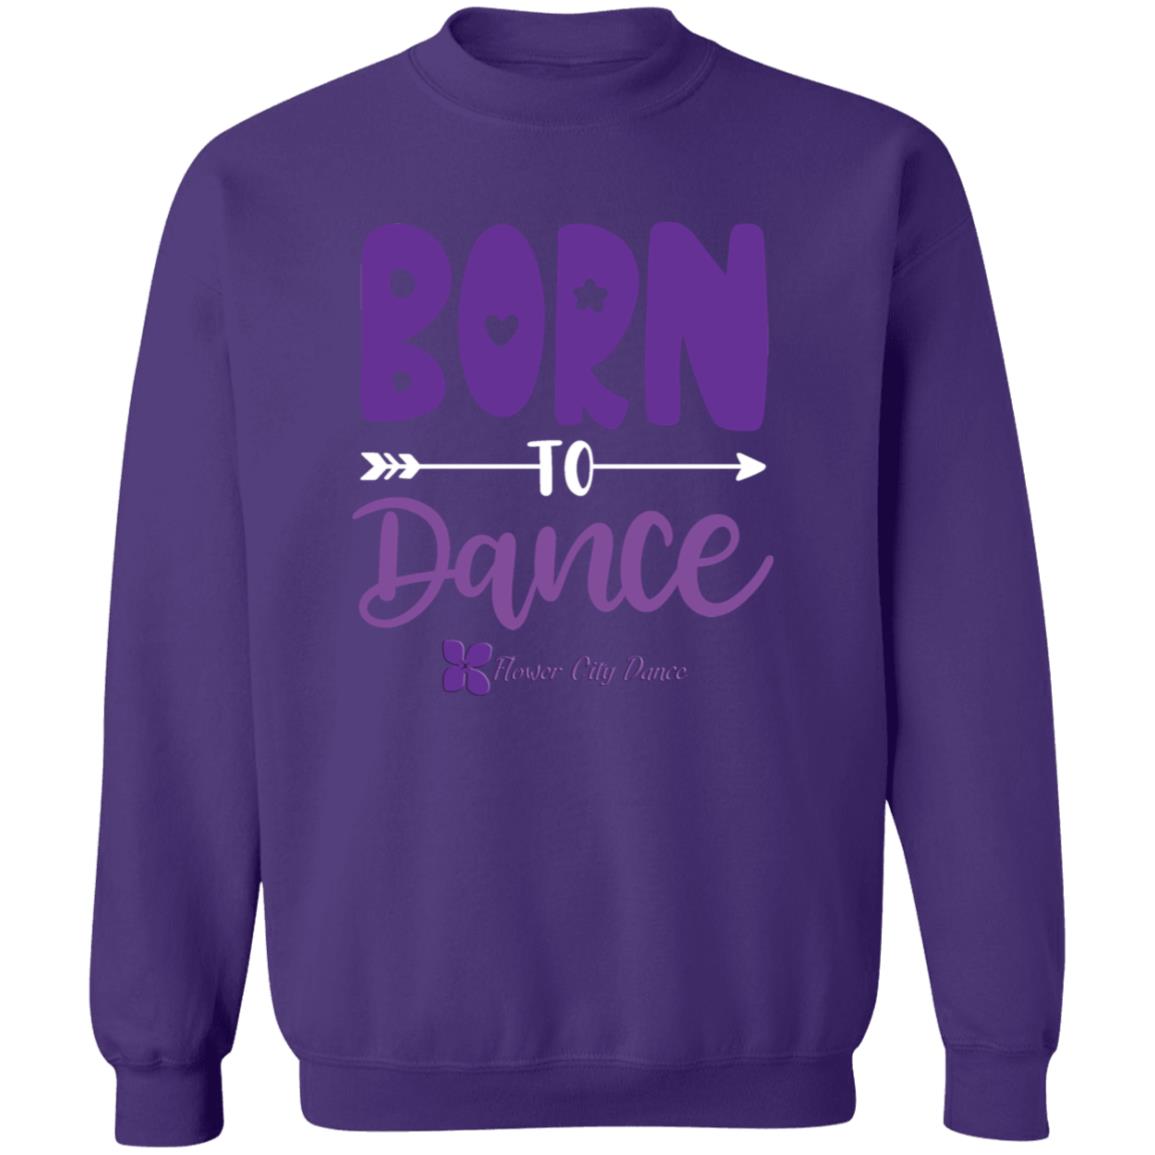 FCD Born to Dance Crewneck Pullover Sweatshirt